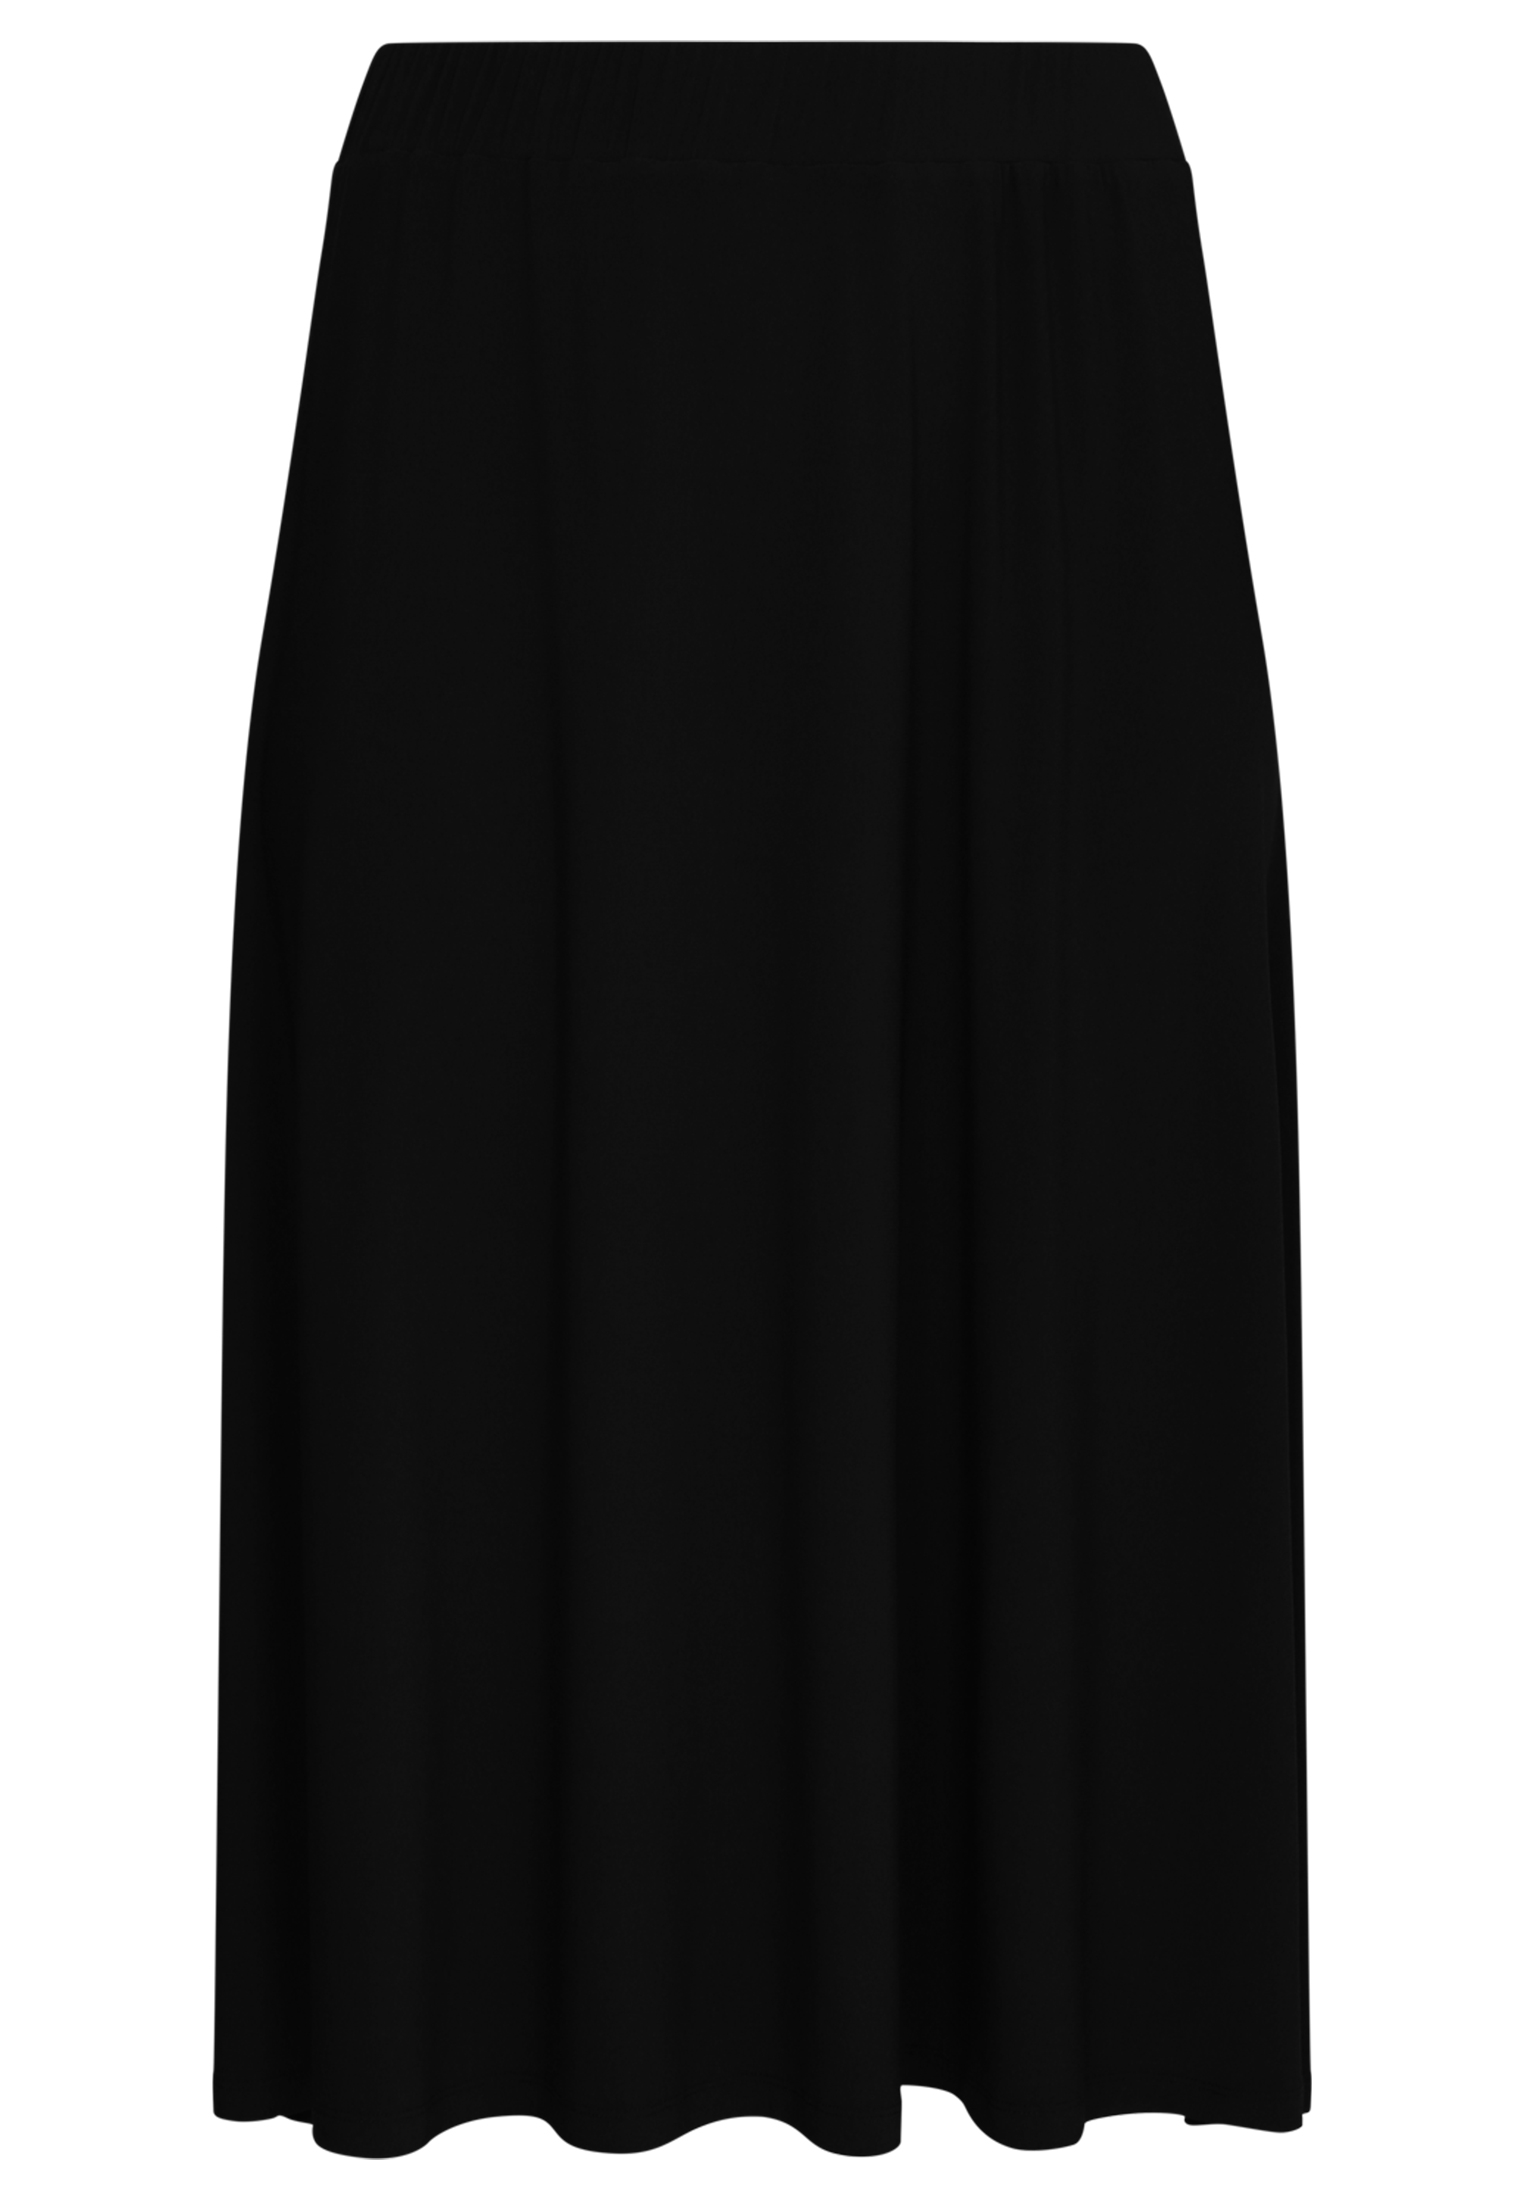 Skirt A-Line DOLCE - black 